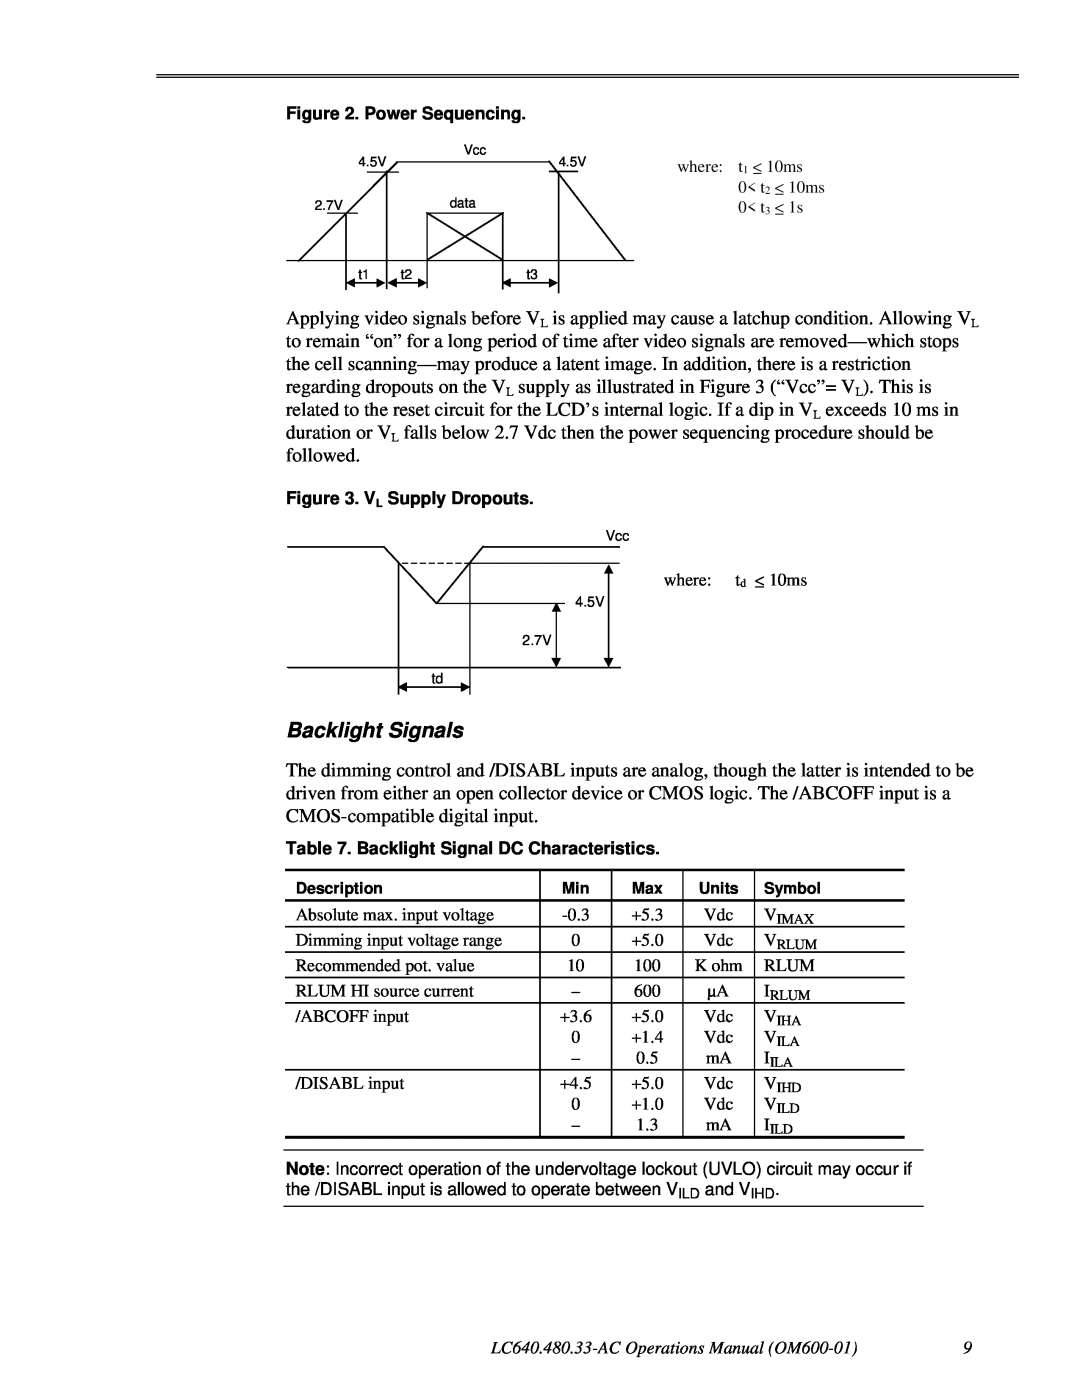 Planar LC640.480.33-AC manual Backlight Signals, Power Sequencing, VL Supply Dropouts, Backlight Signal DC Characteristics 